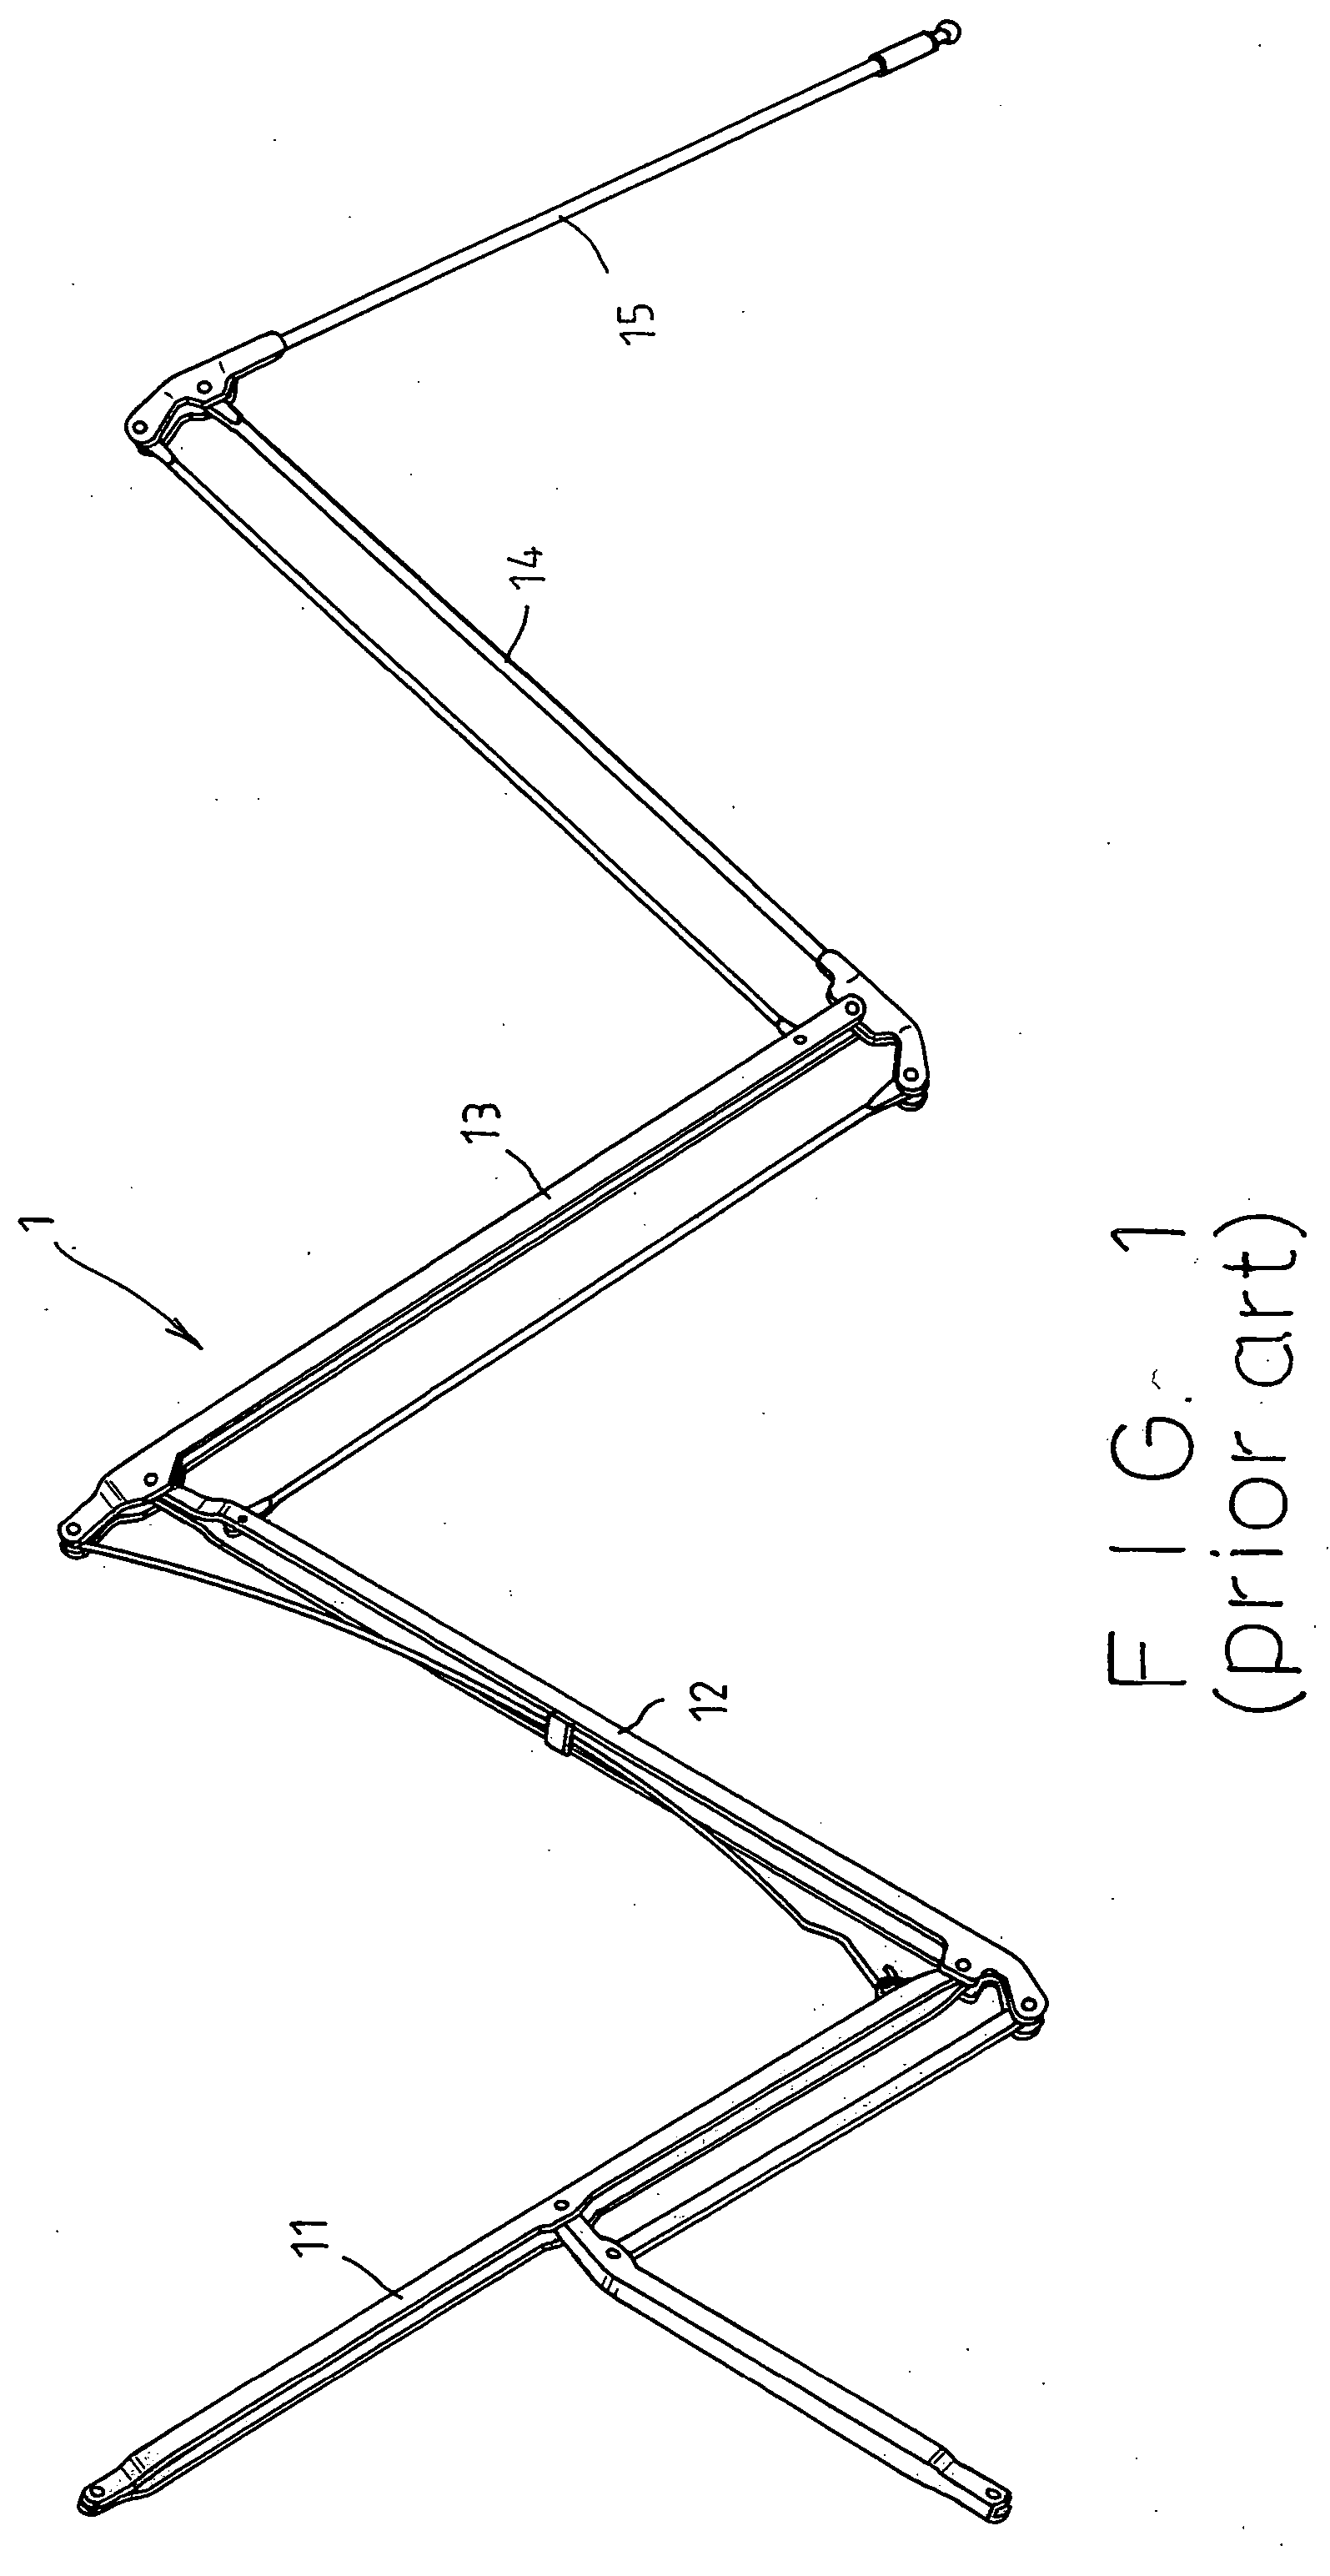 Foldable umbrella frame having five ribs (IV)